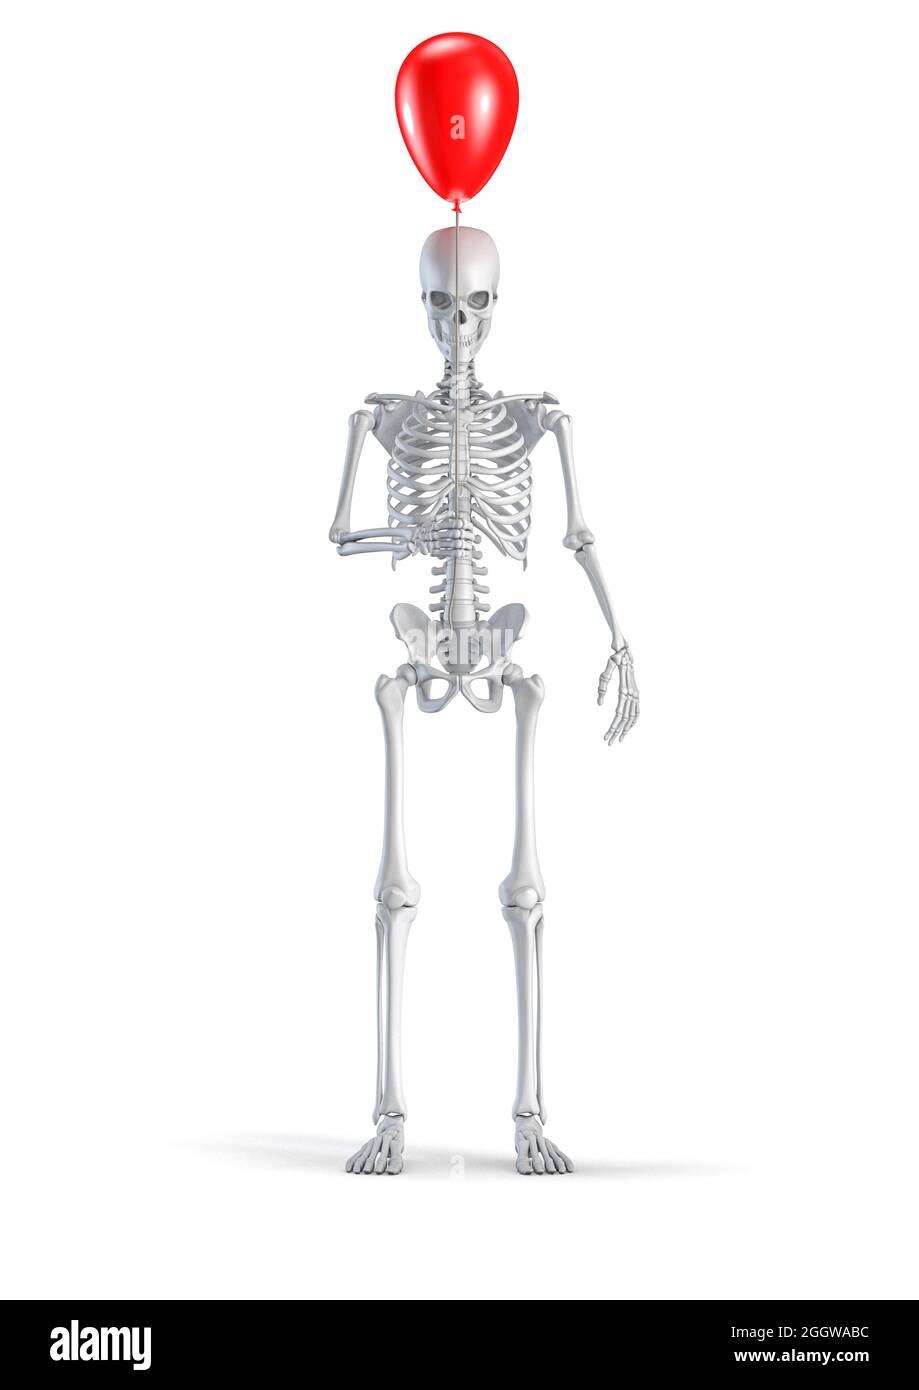 Skeleton with balloon - 3D illustration of male human skeleton figure  holding red plastic balloon isolated on white studio background Stock Photo  - Alamy